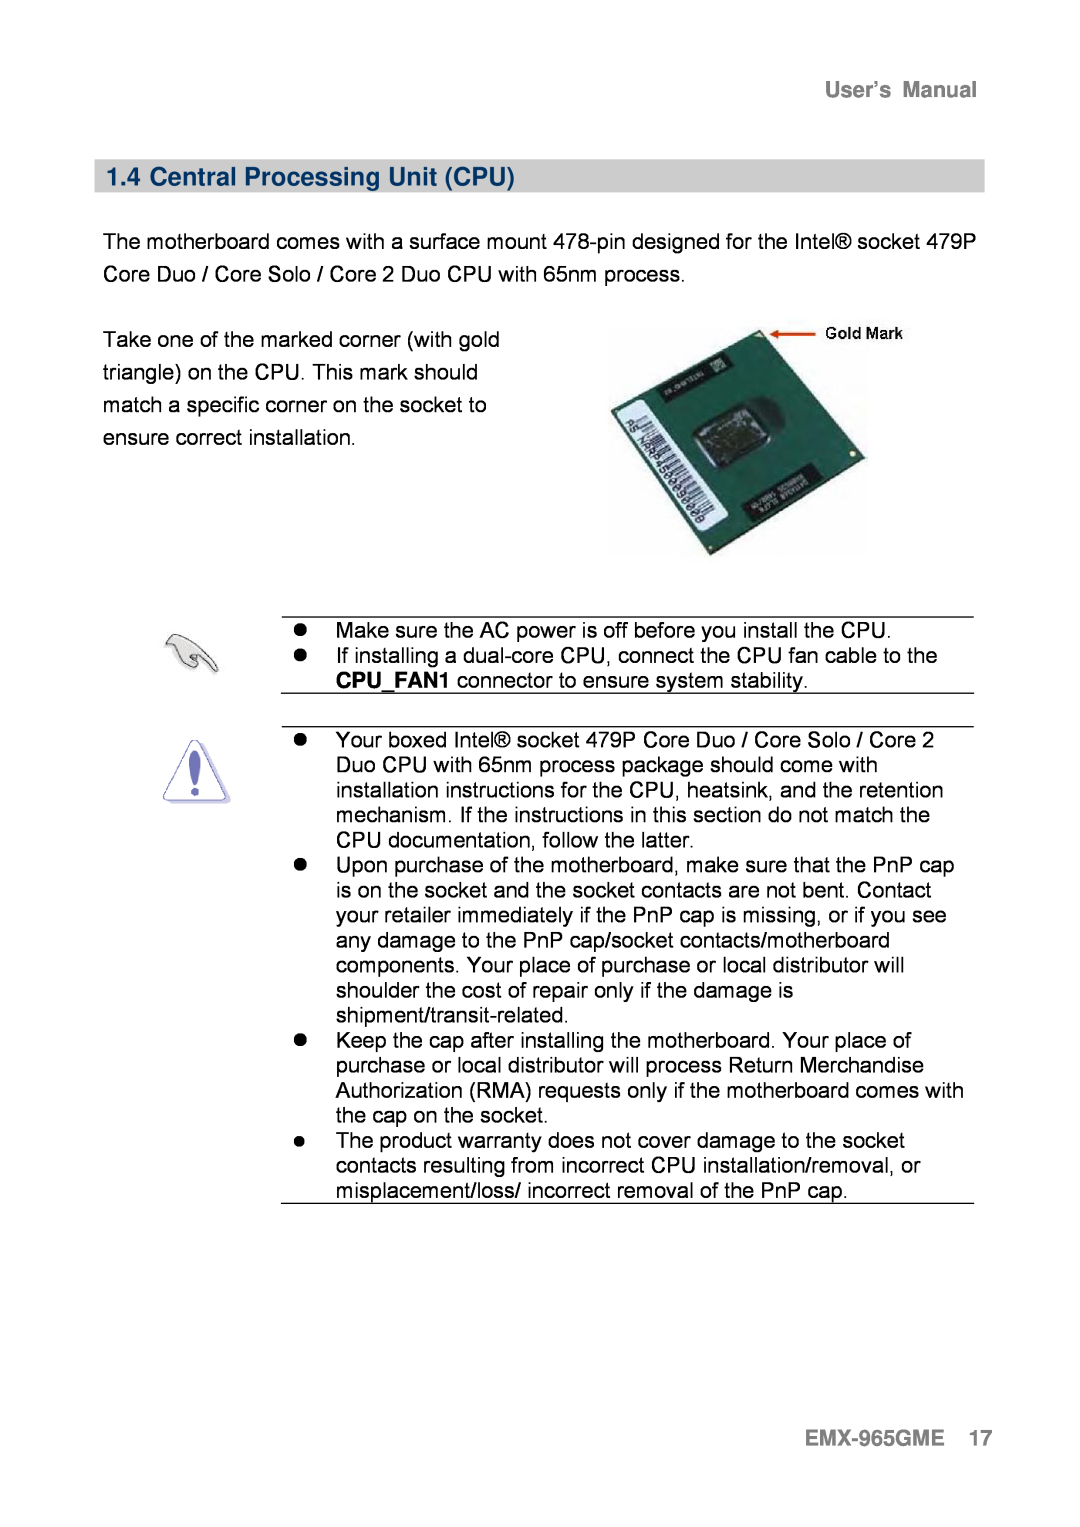 Intel user manual Central Processing Unit CPU, EMX-965GME17, User’s Manual 